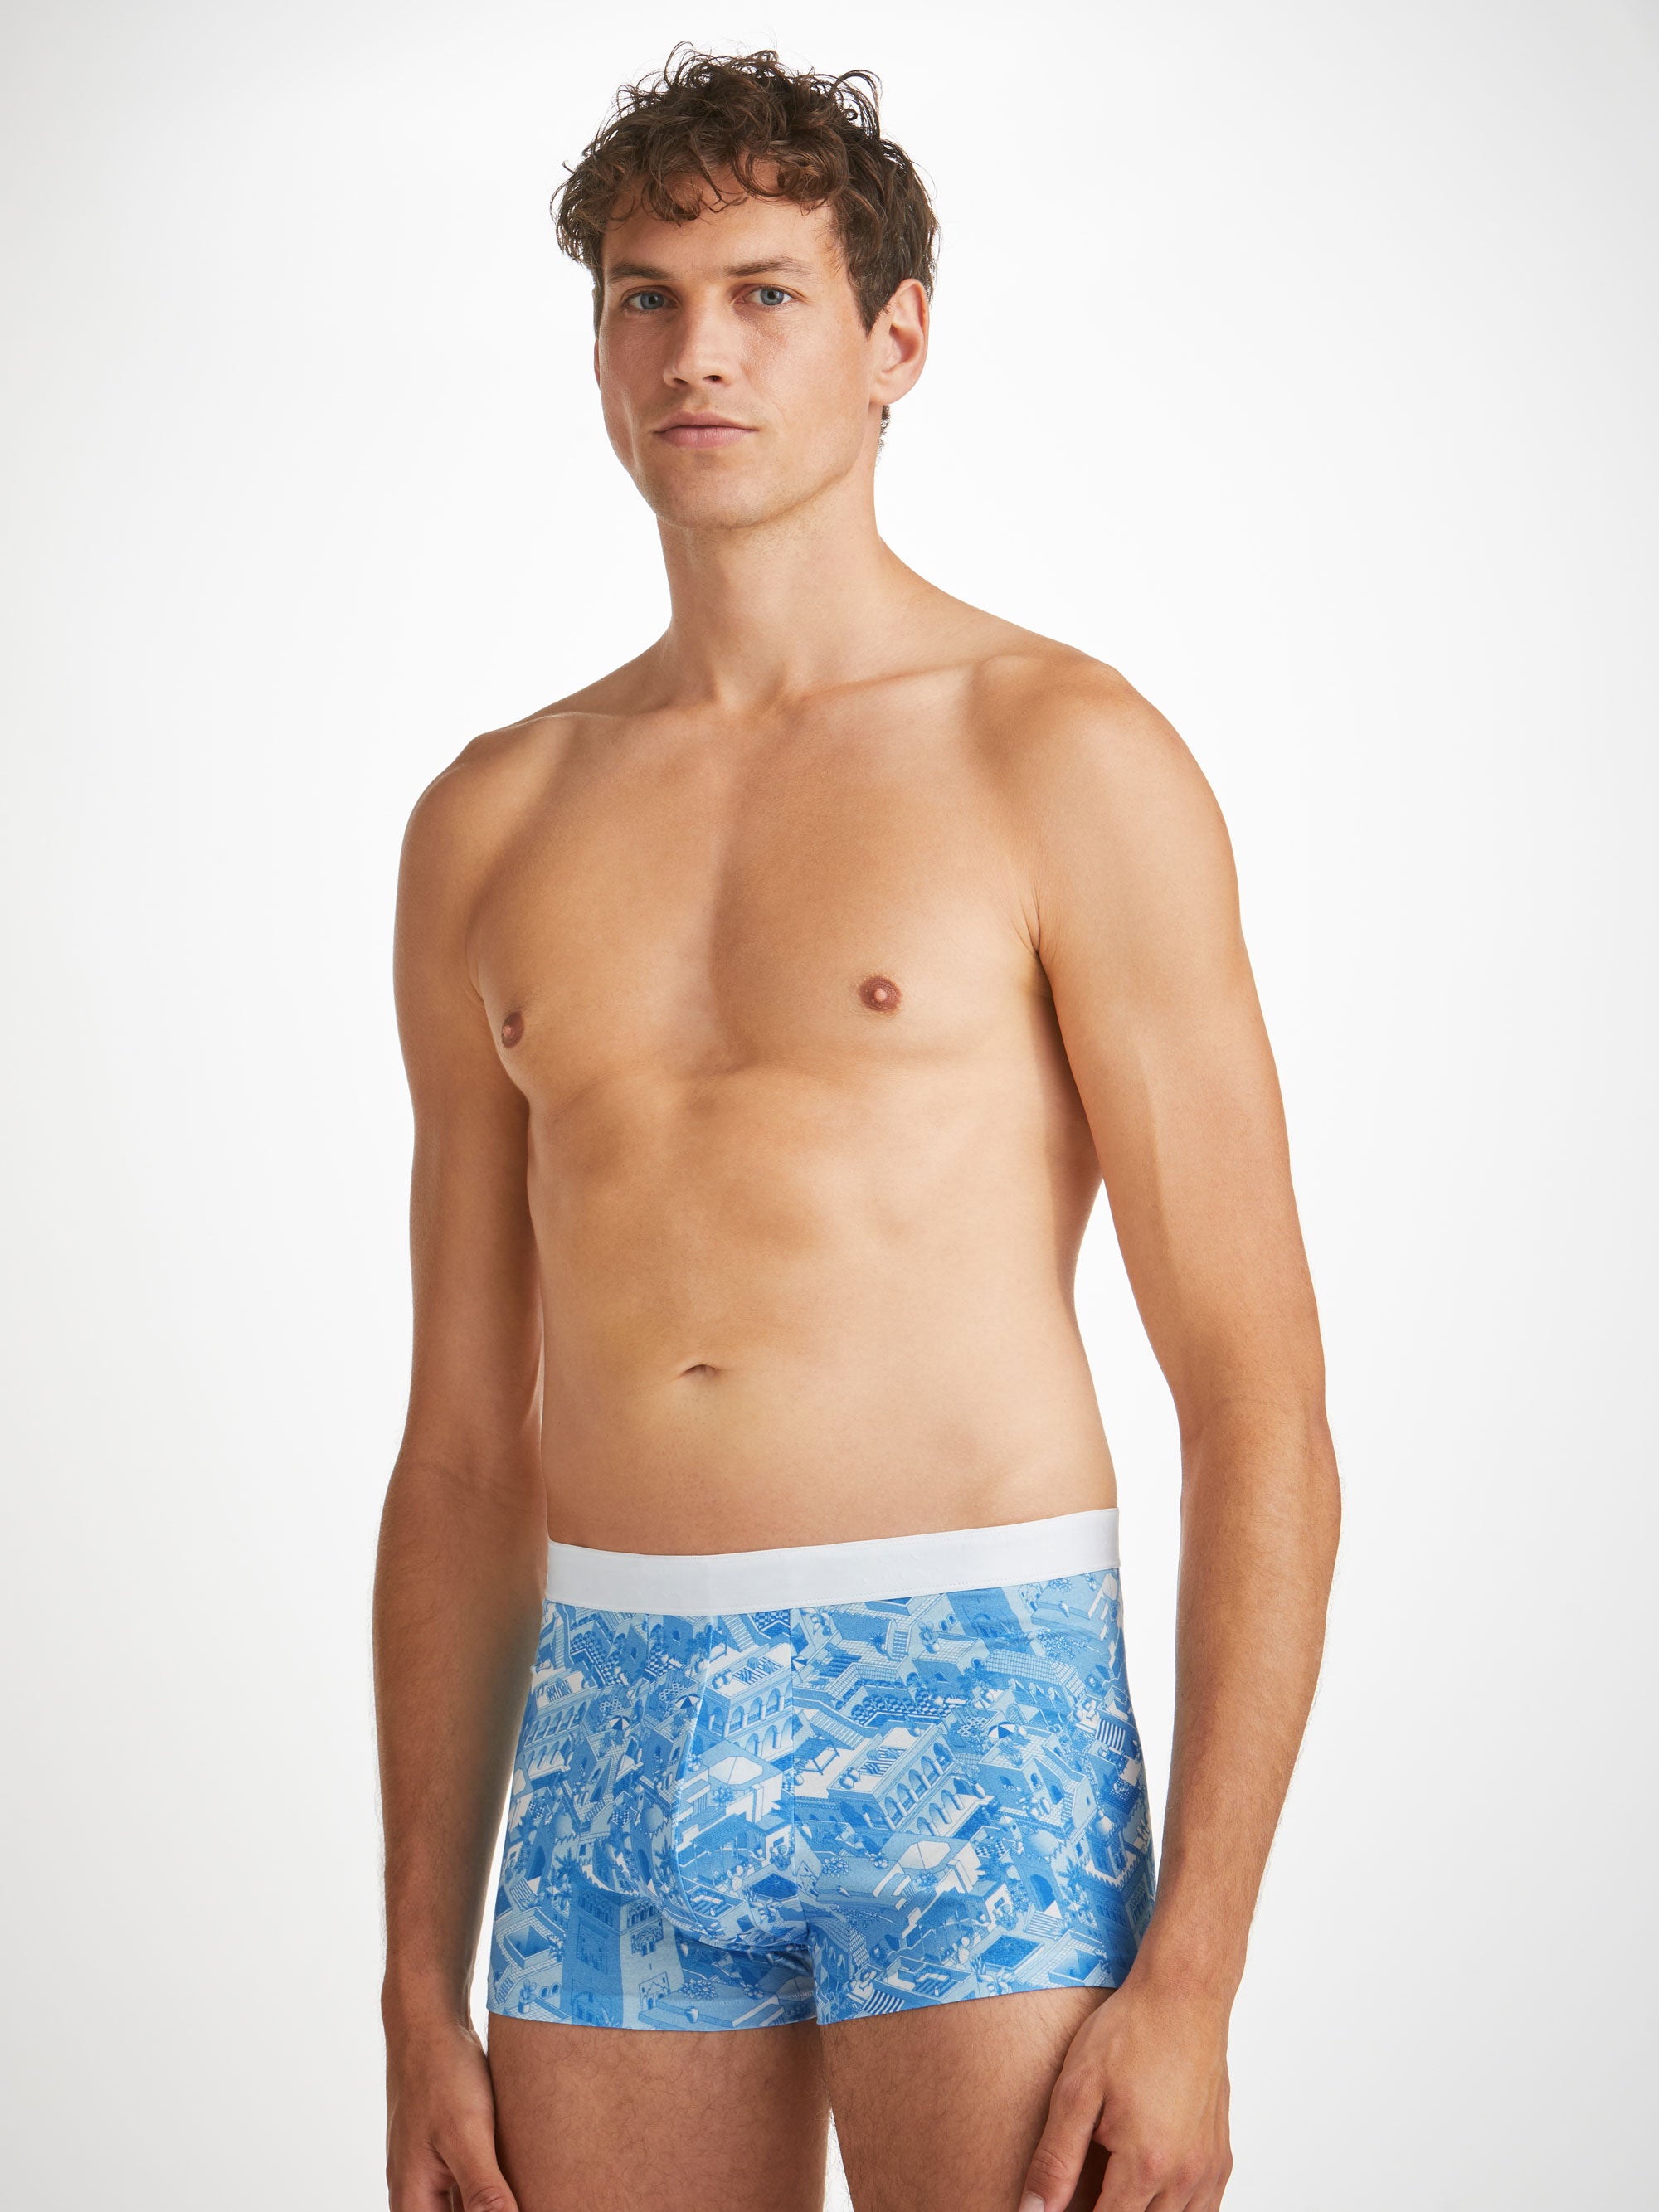 Richkeda Store Mens Separate Boxer Breathable Underwear For Men